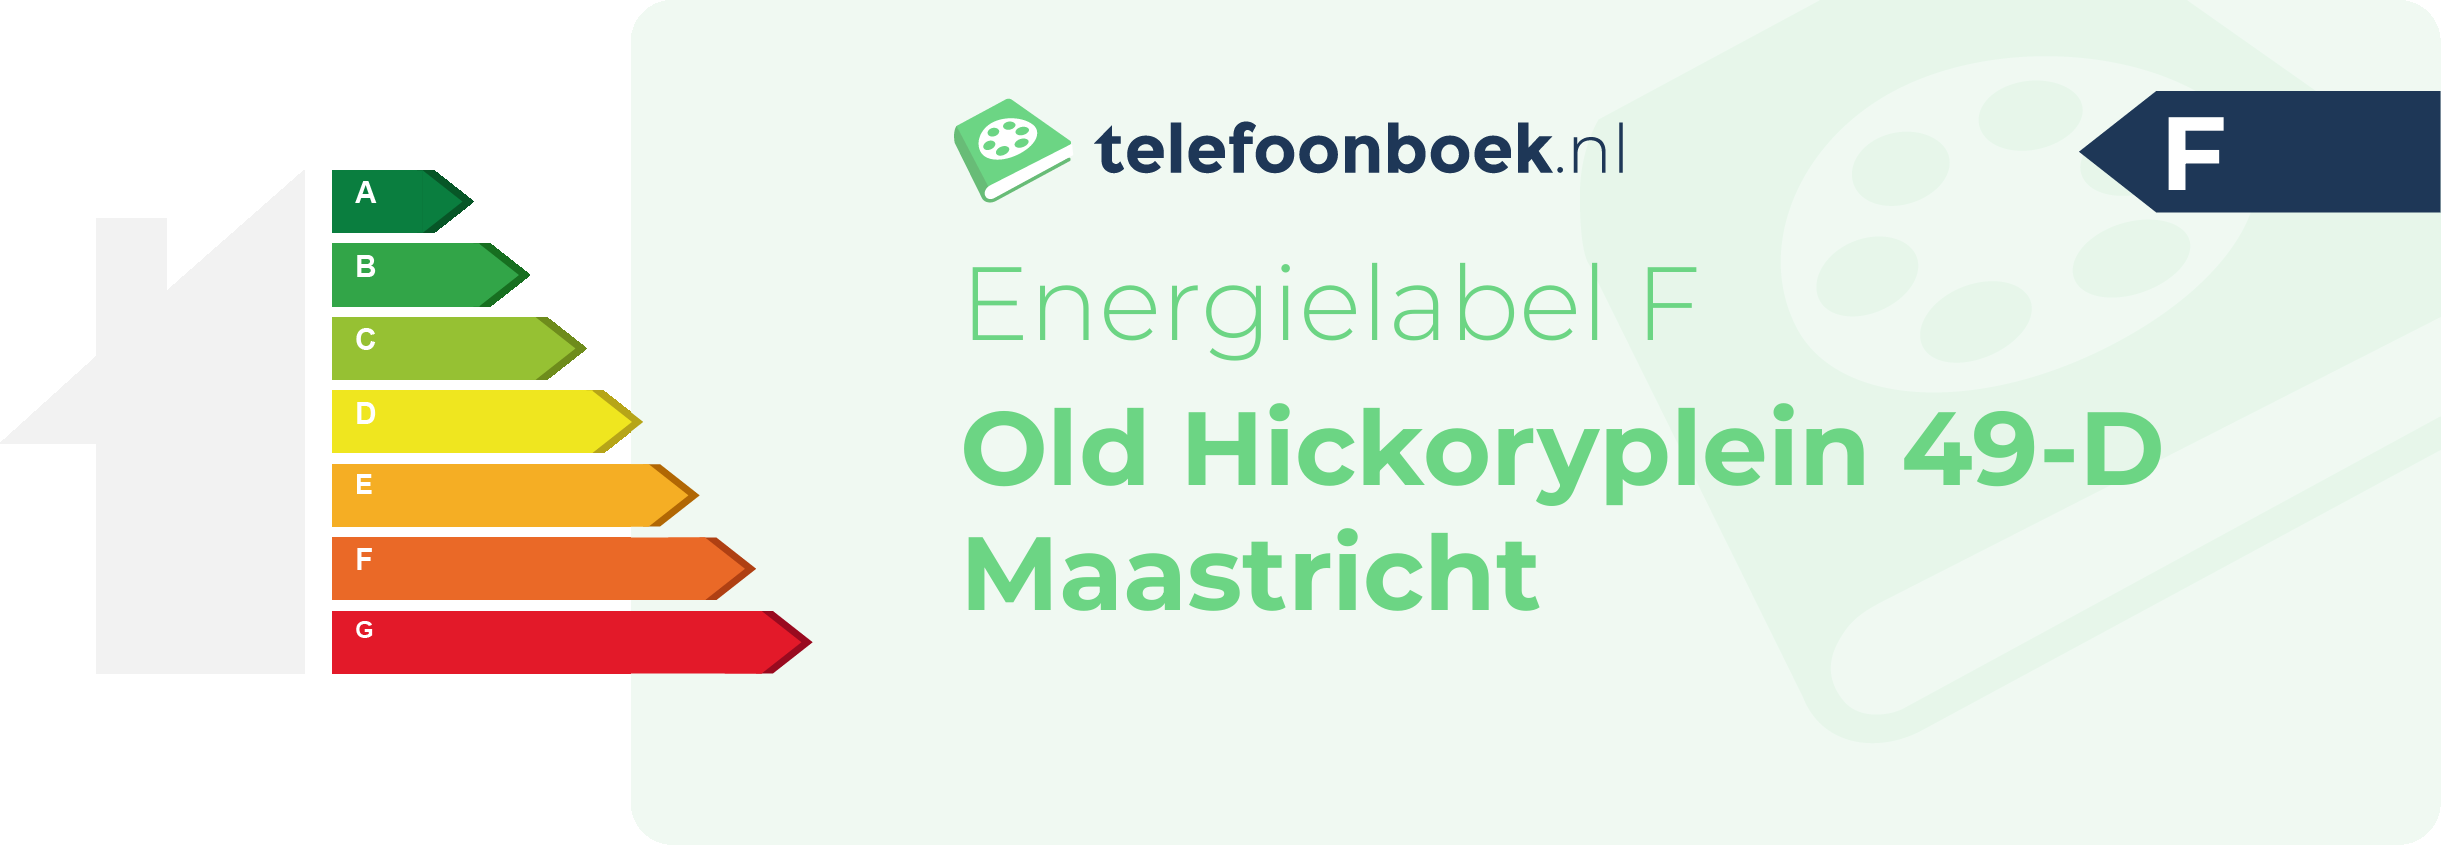 Energielabel Old Hickoryplein 49-D Maastricht